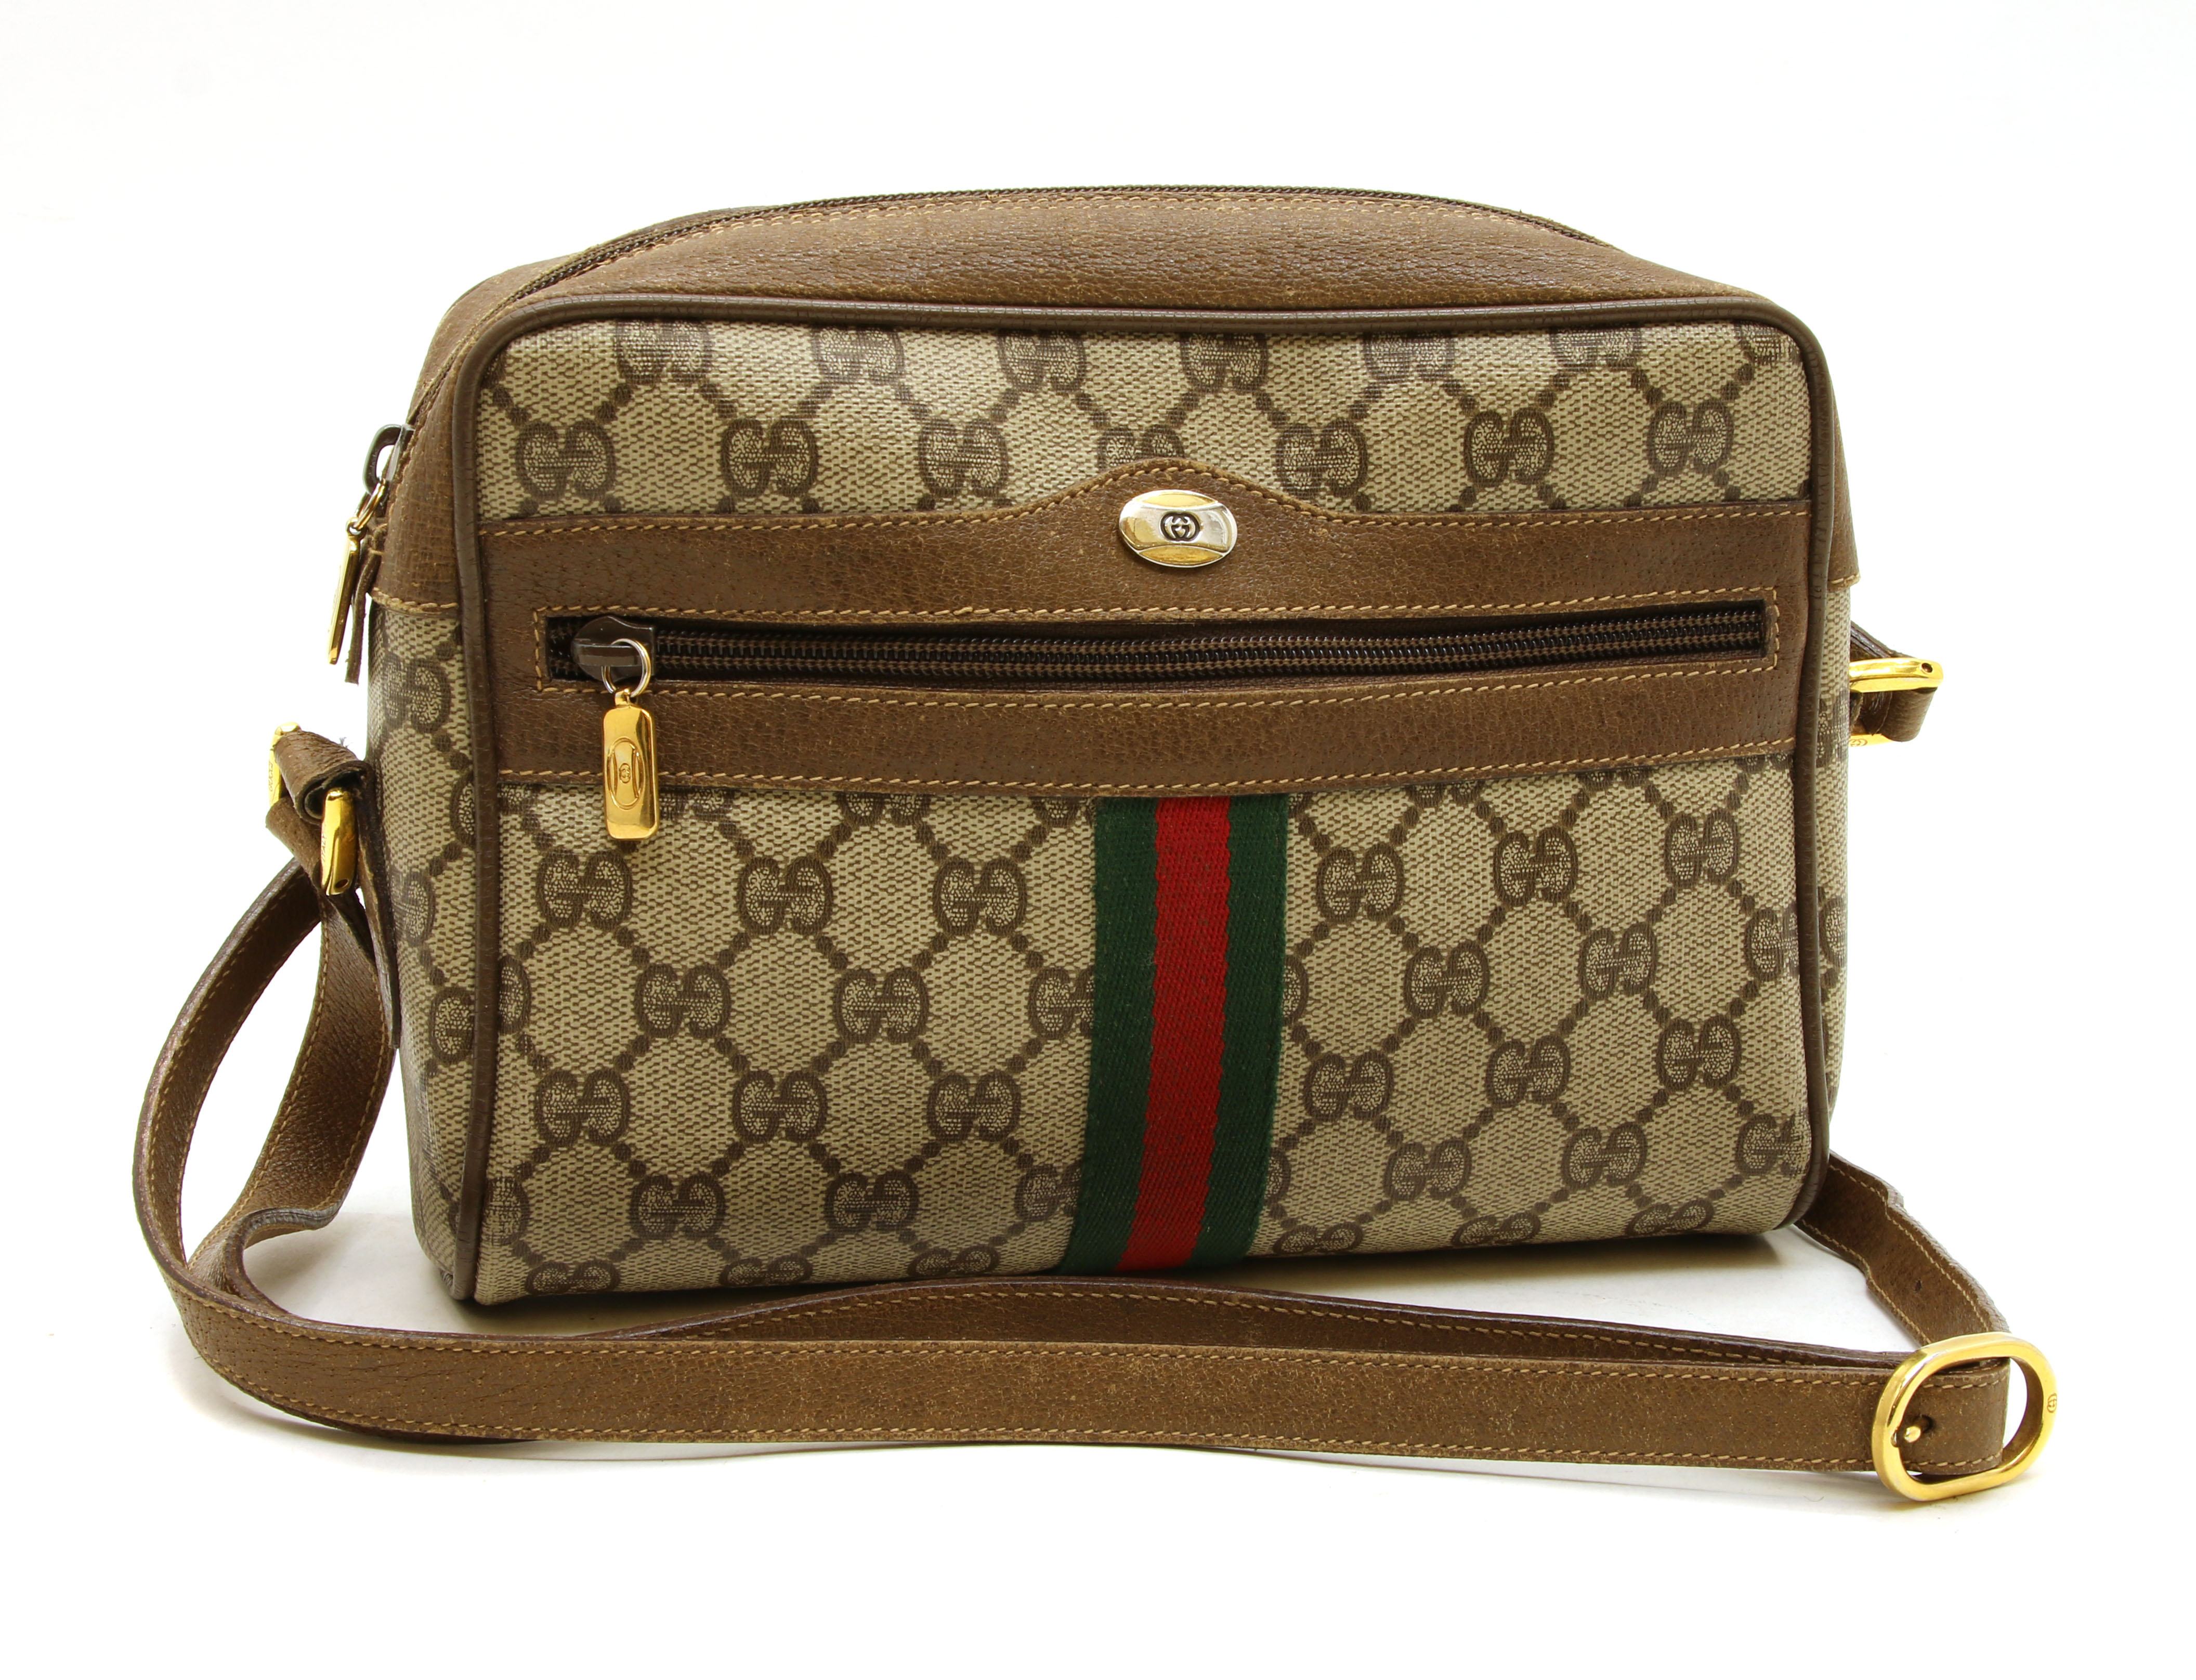 Sold at Auction: Gucci Accessory Collection GG Supreme Web Boston Bag